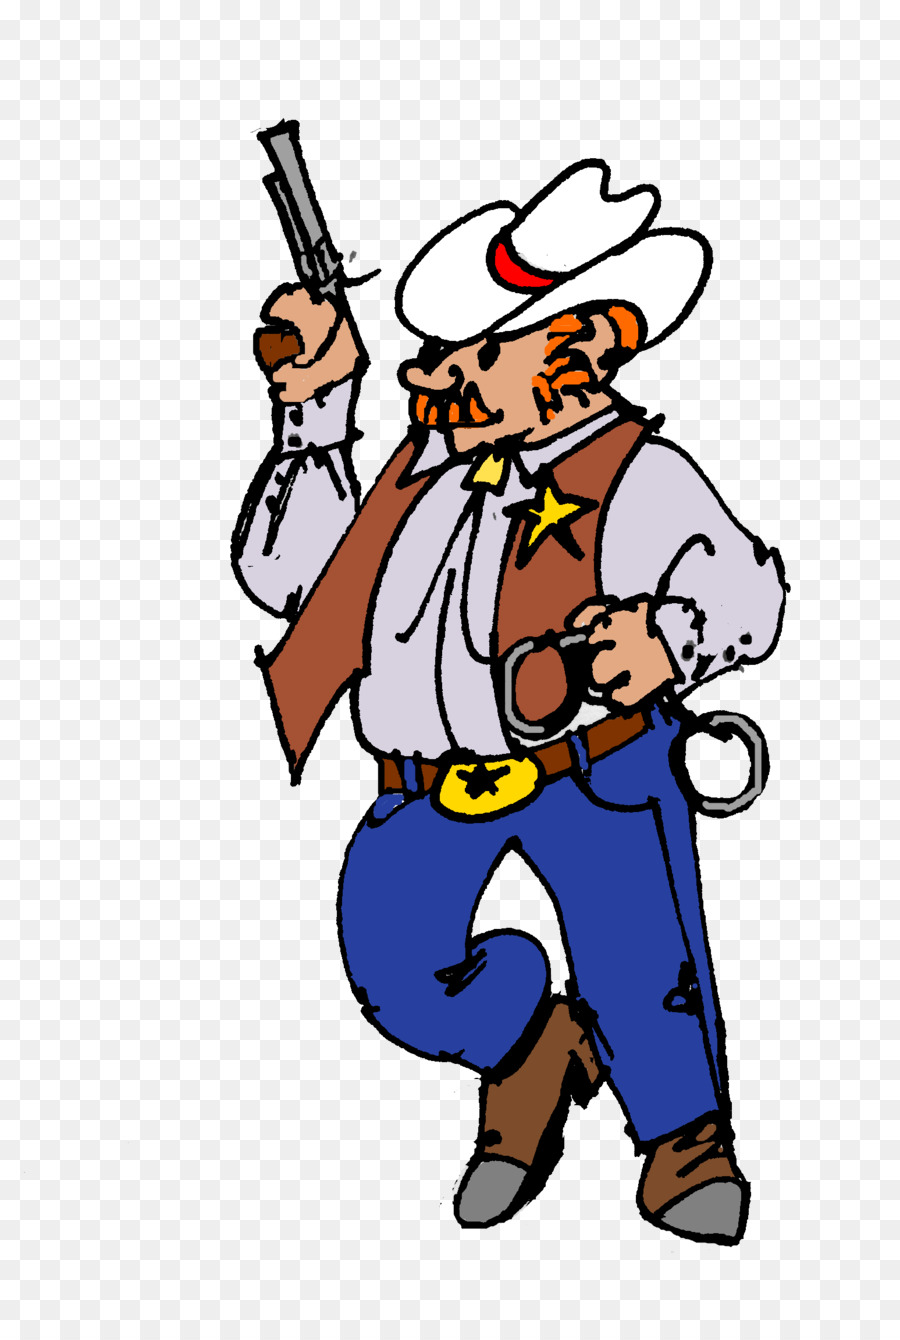 Monopoly-Spiel Sheriff Clip-art - Sheriff